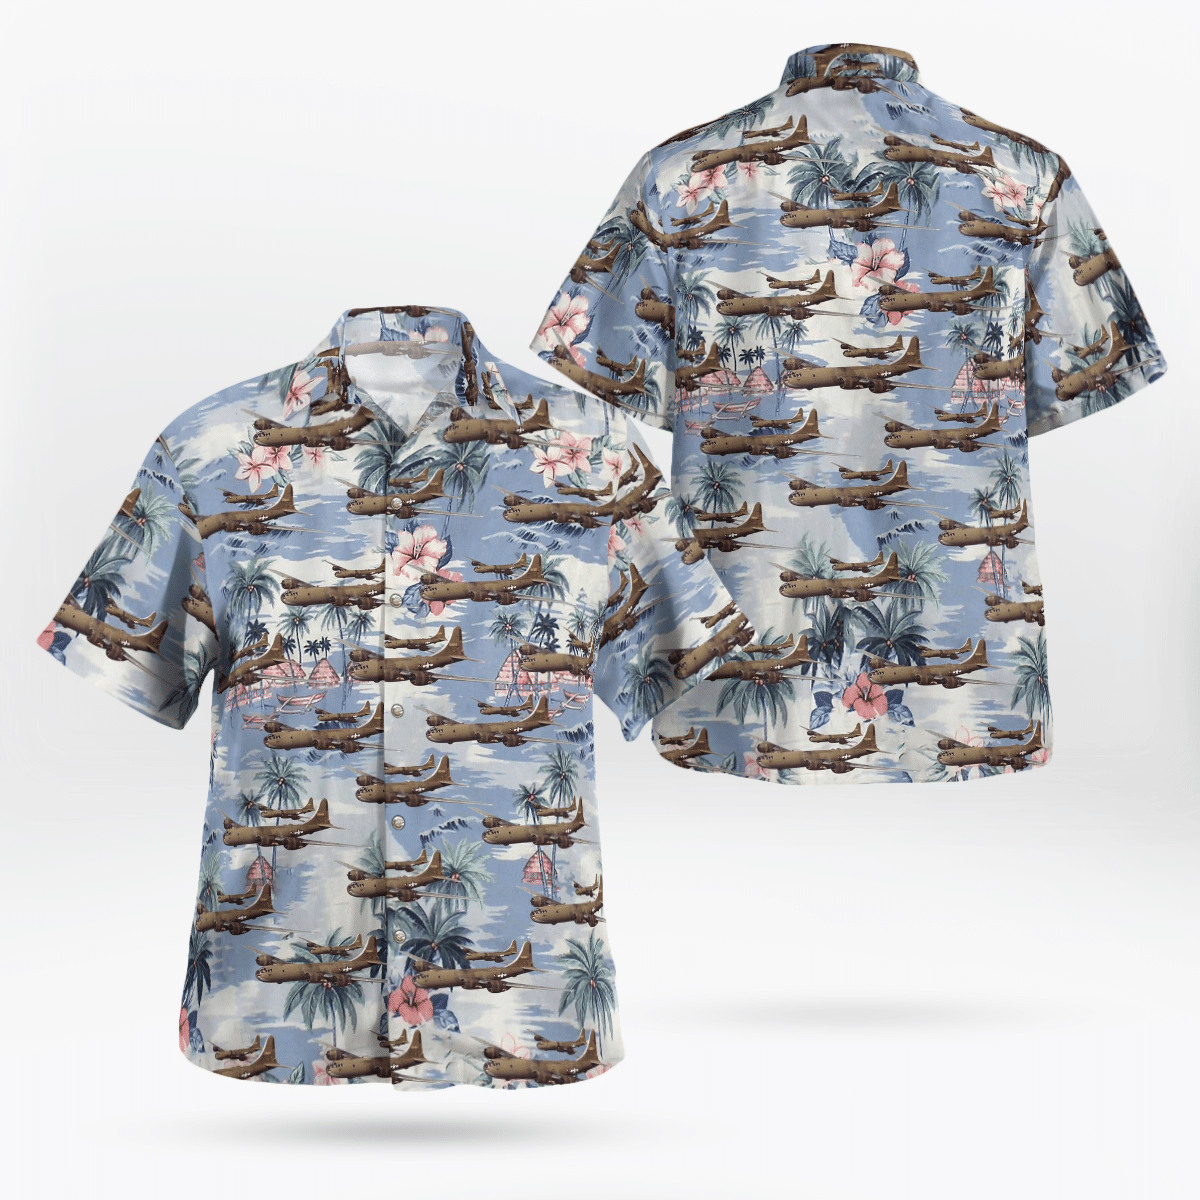 Summer so cool with top new hawaiian shirt below 53